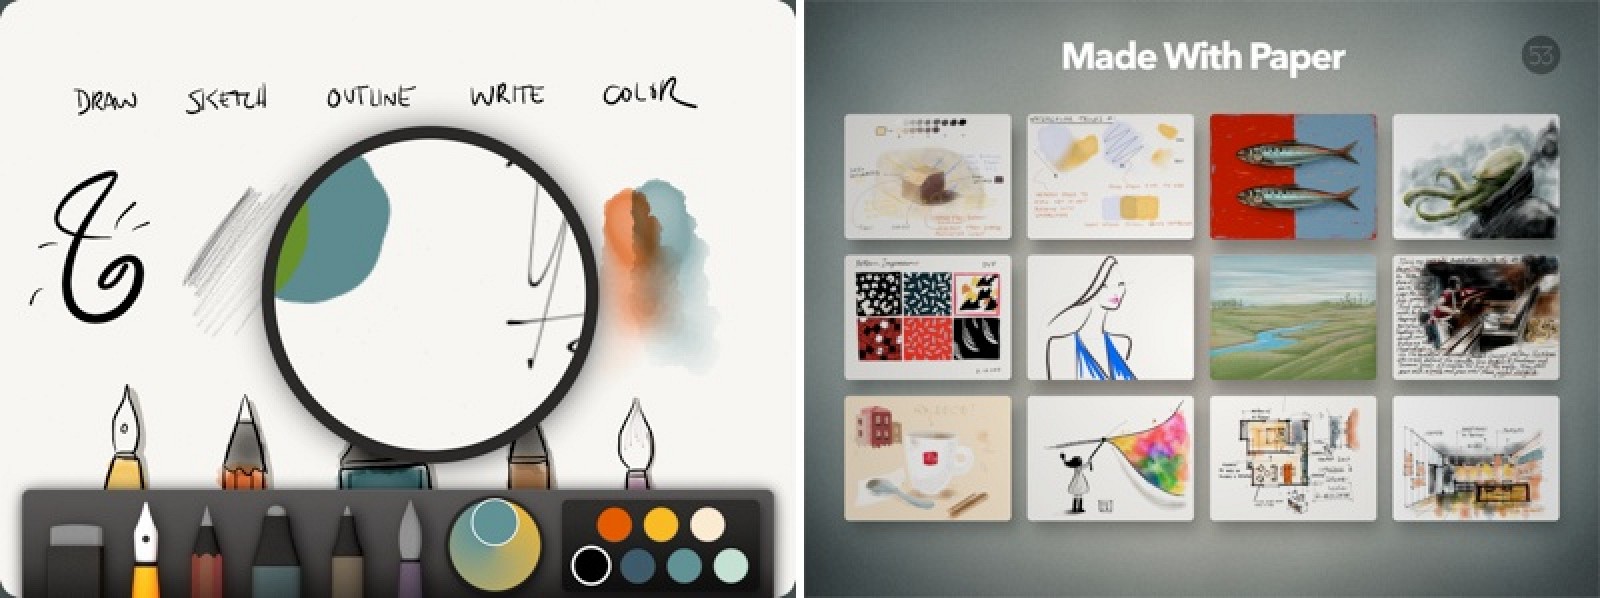 5 impressive drawing apps on iPad 